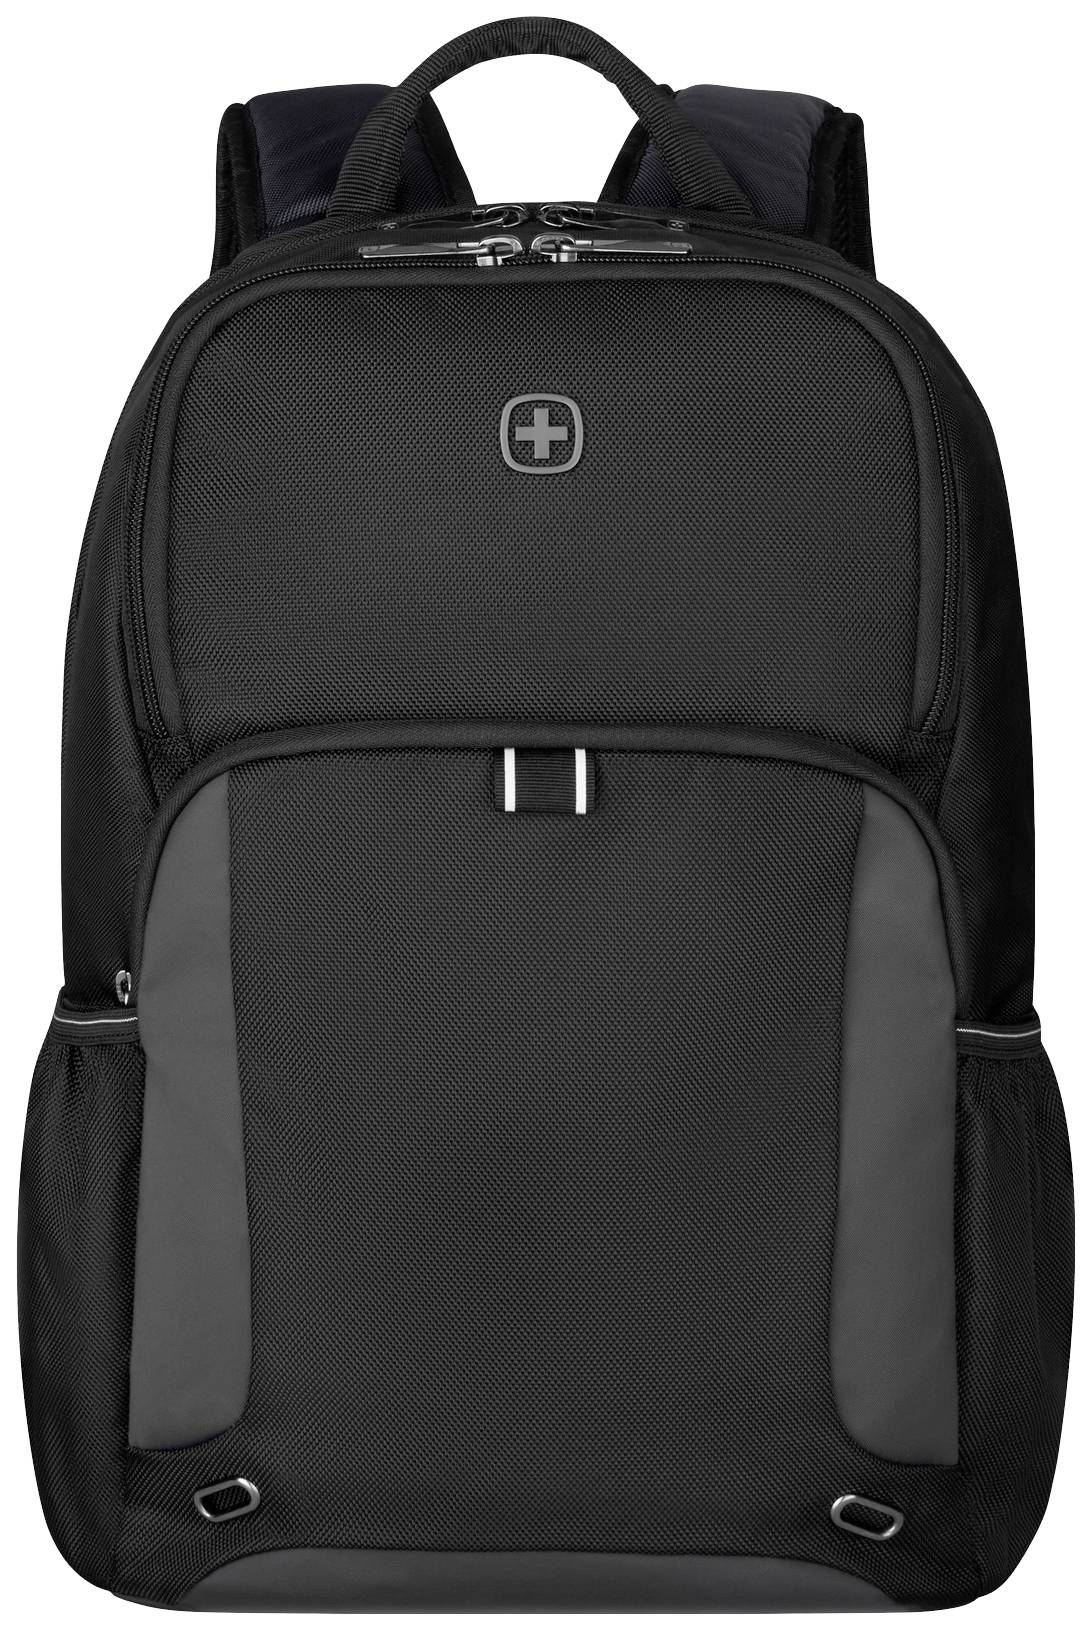 WENGER XE Tryal 15.6 Laptop Rucksack mit Tablet Fach schwarz